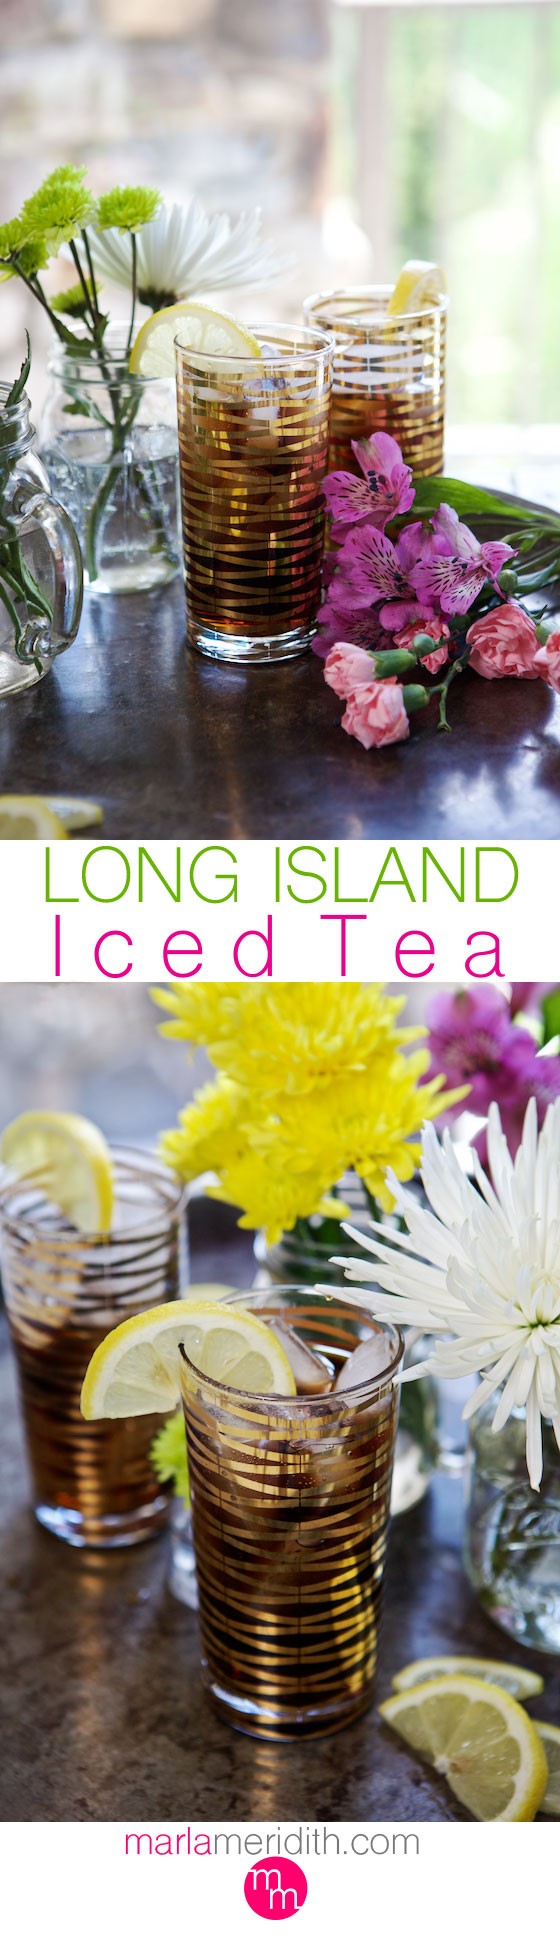 Long Island Iced Tea | Not your regular iced tea! MarlaMeridith.com ( @marlameridith )